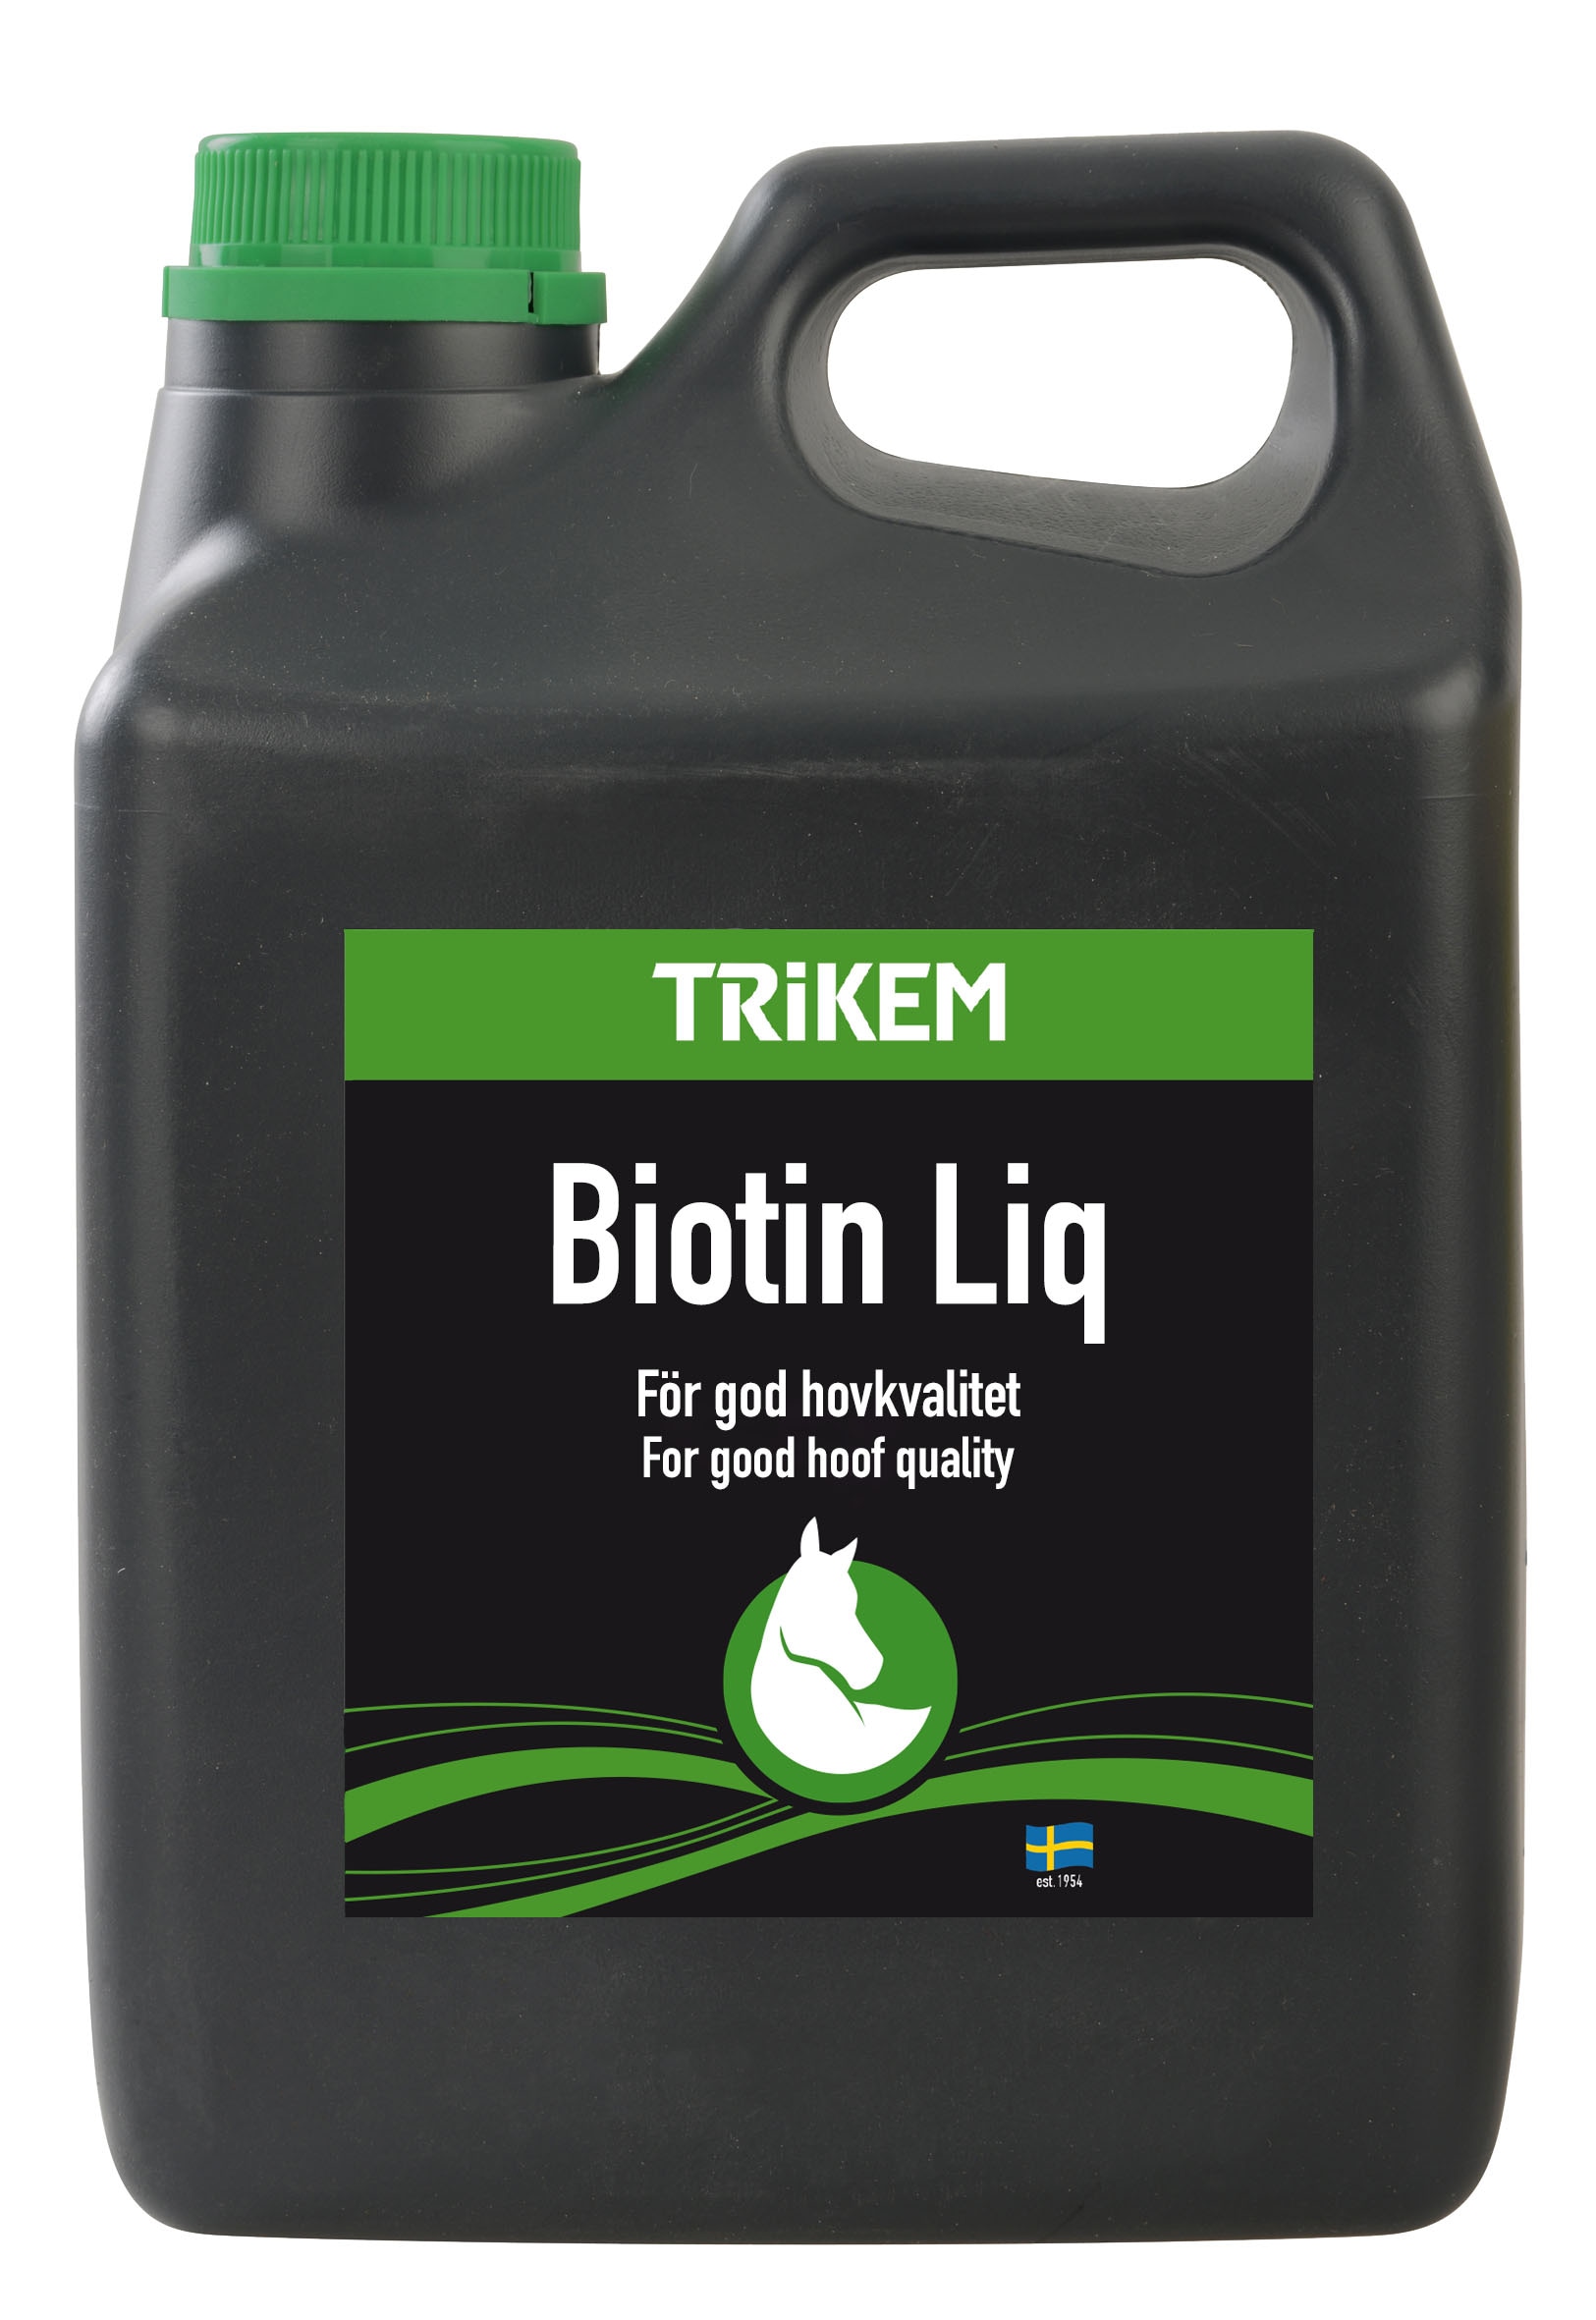 Trikem Biotin liquid